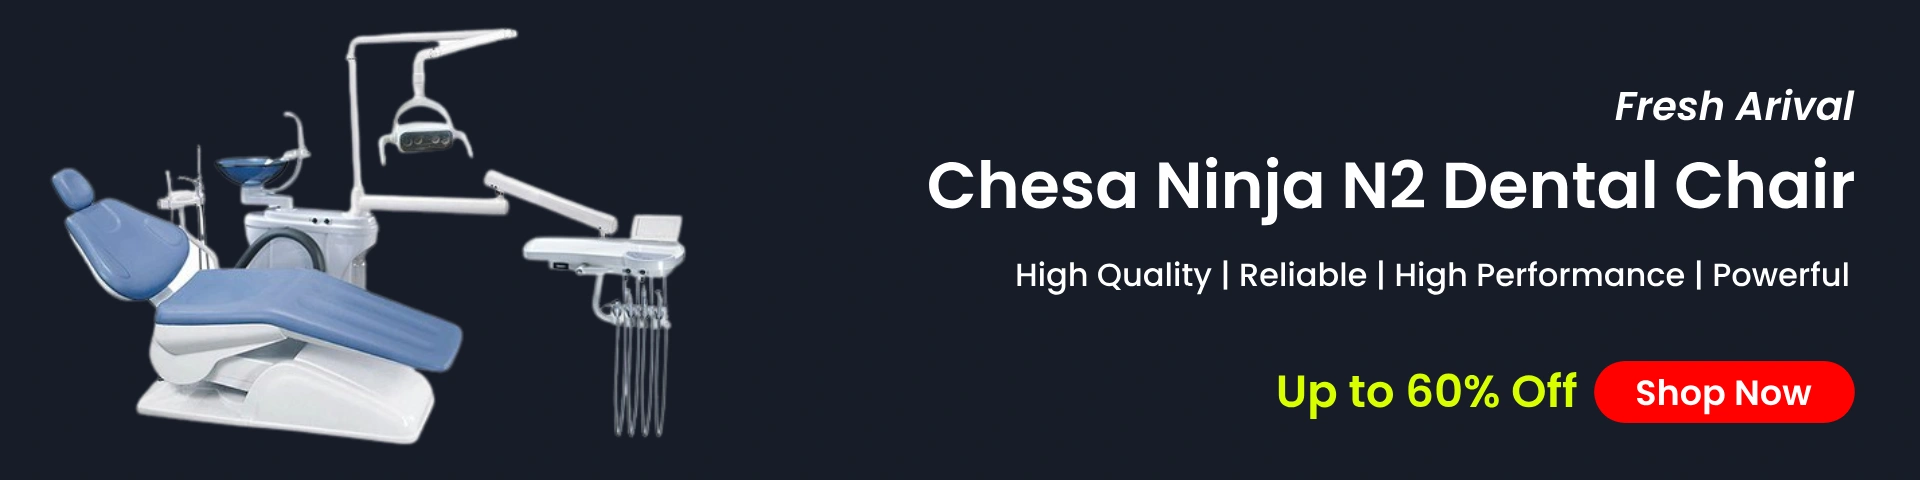 Chesa Ninja N2 Dental Chair